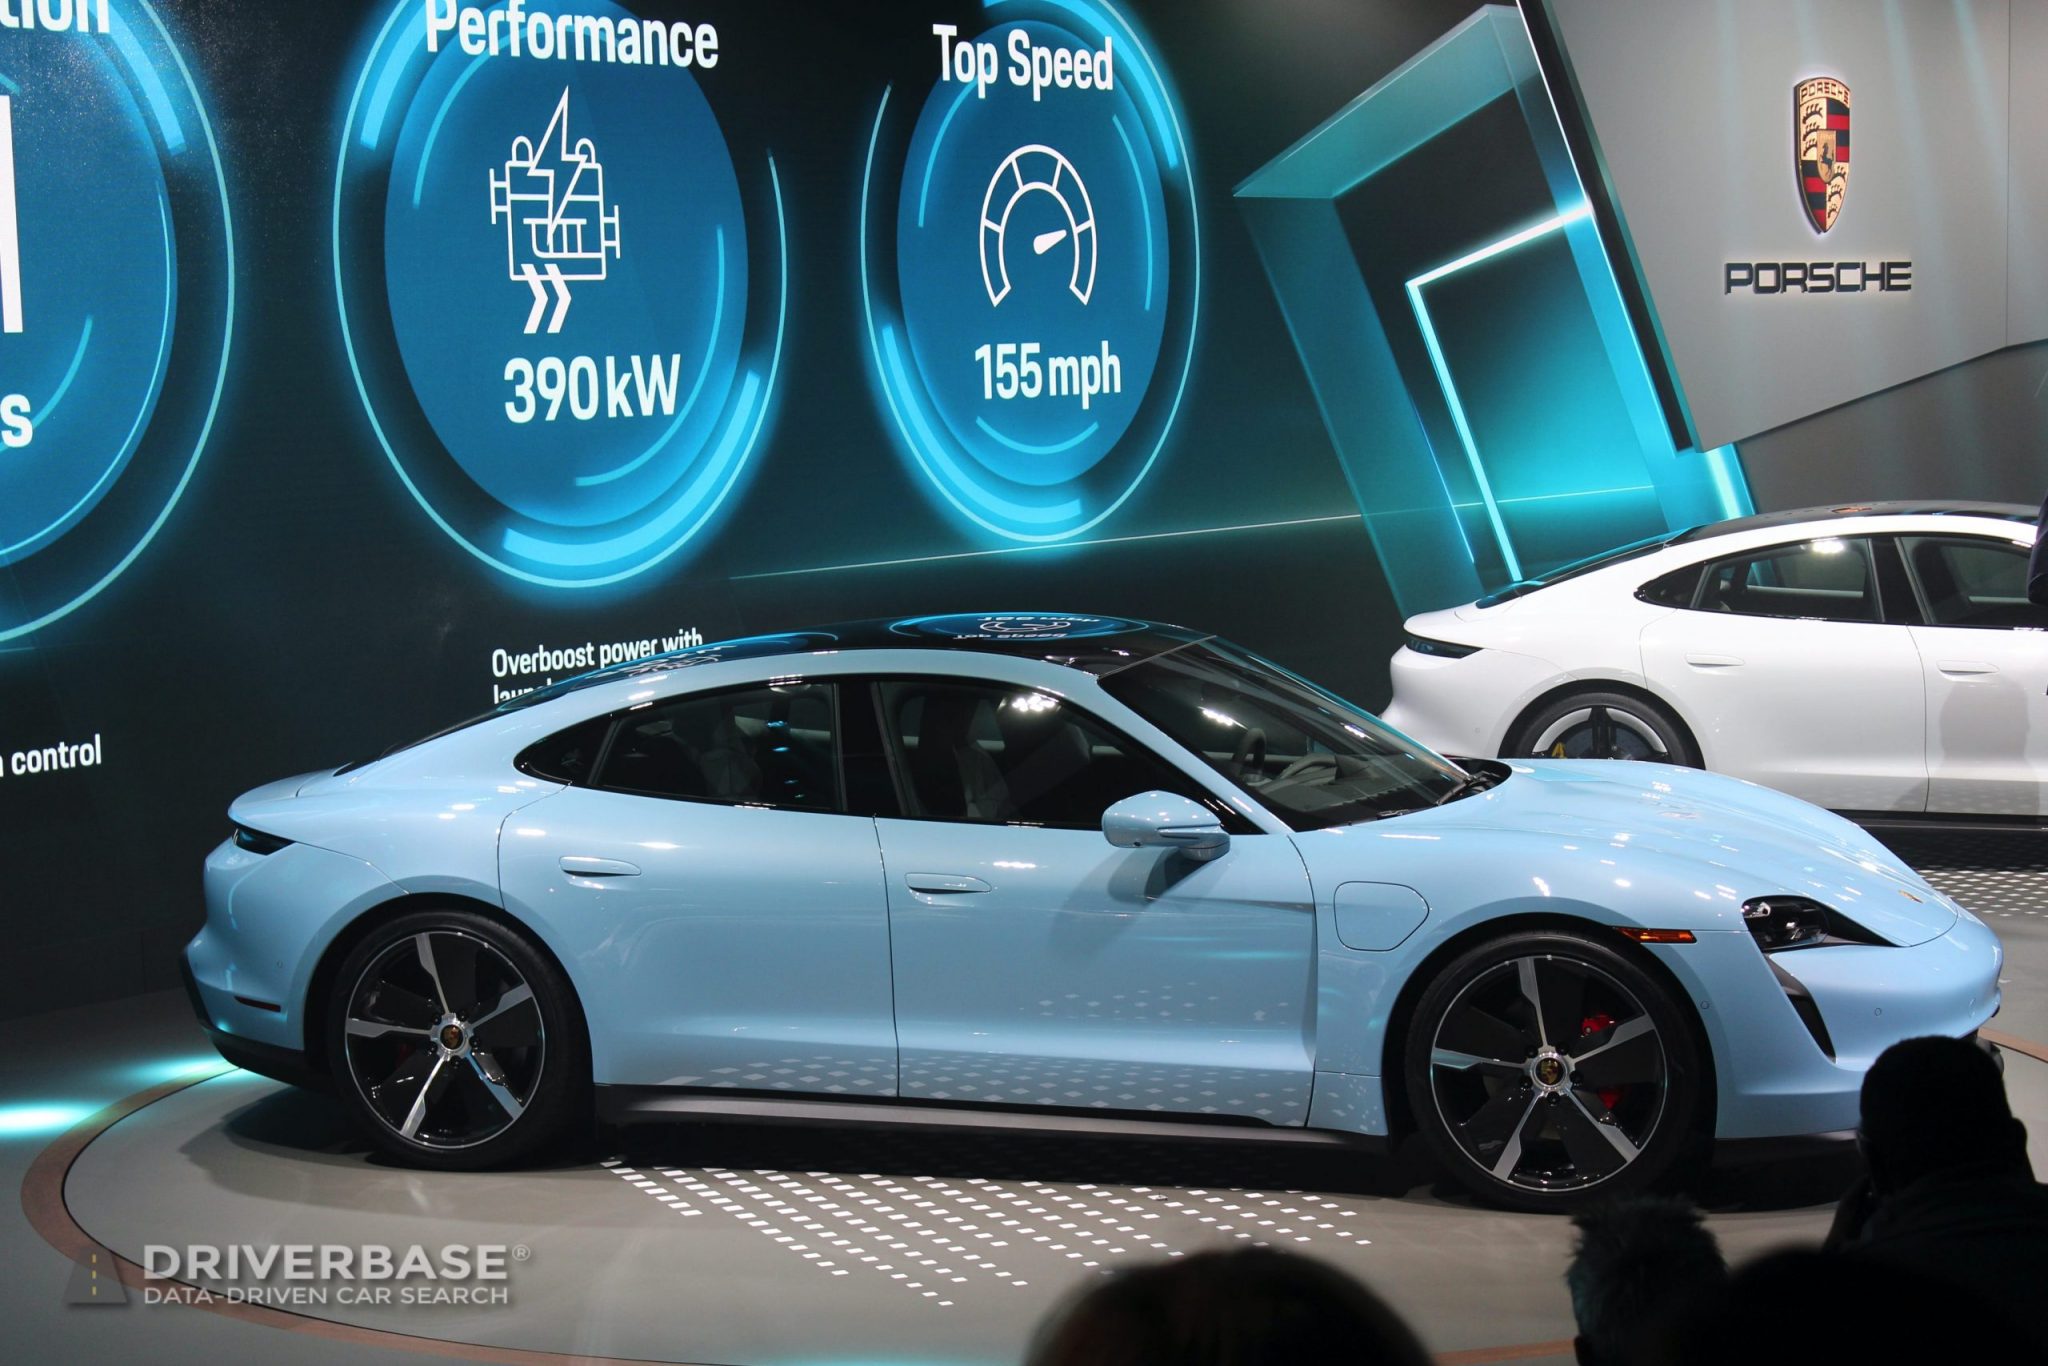 2020 Porsche Taycan Launch at the 2019 Los Angeles Auto Show